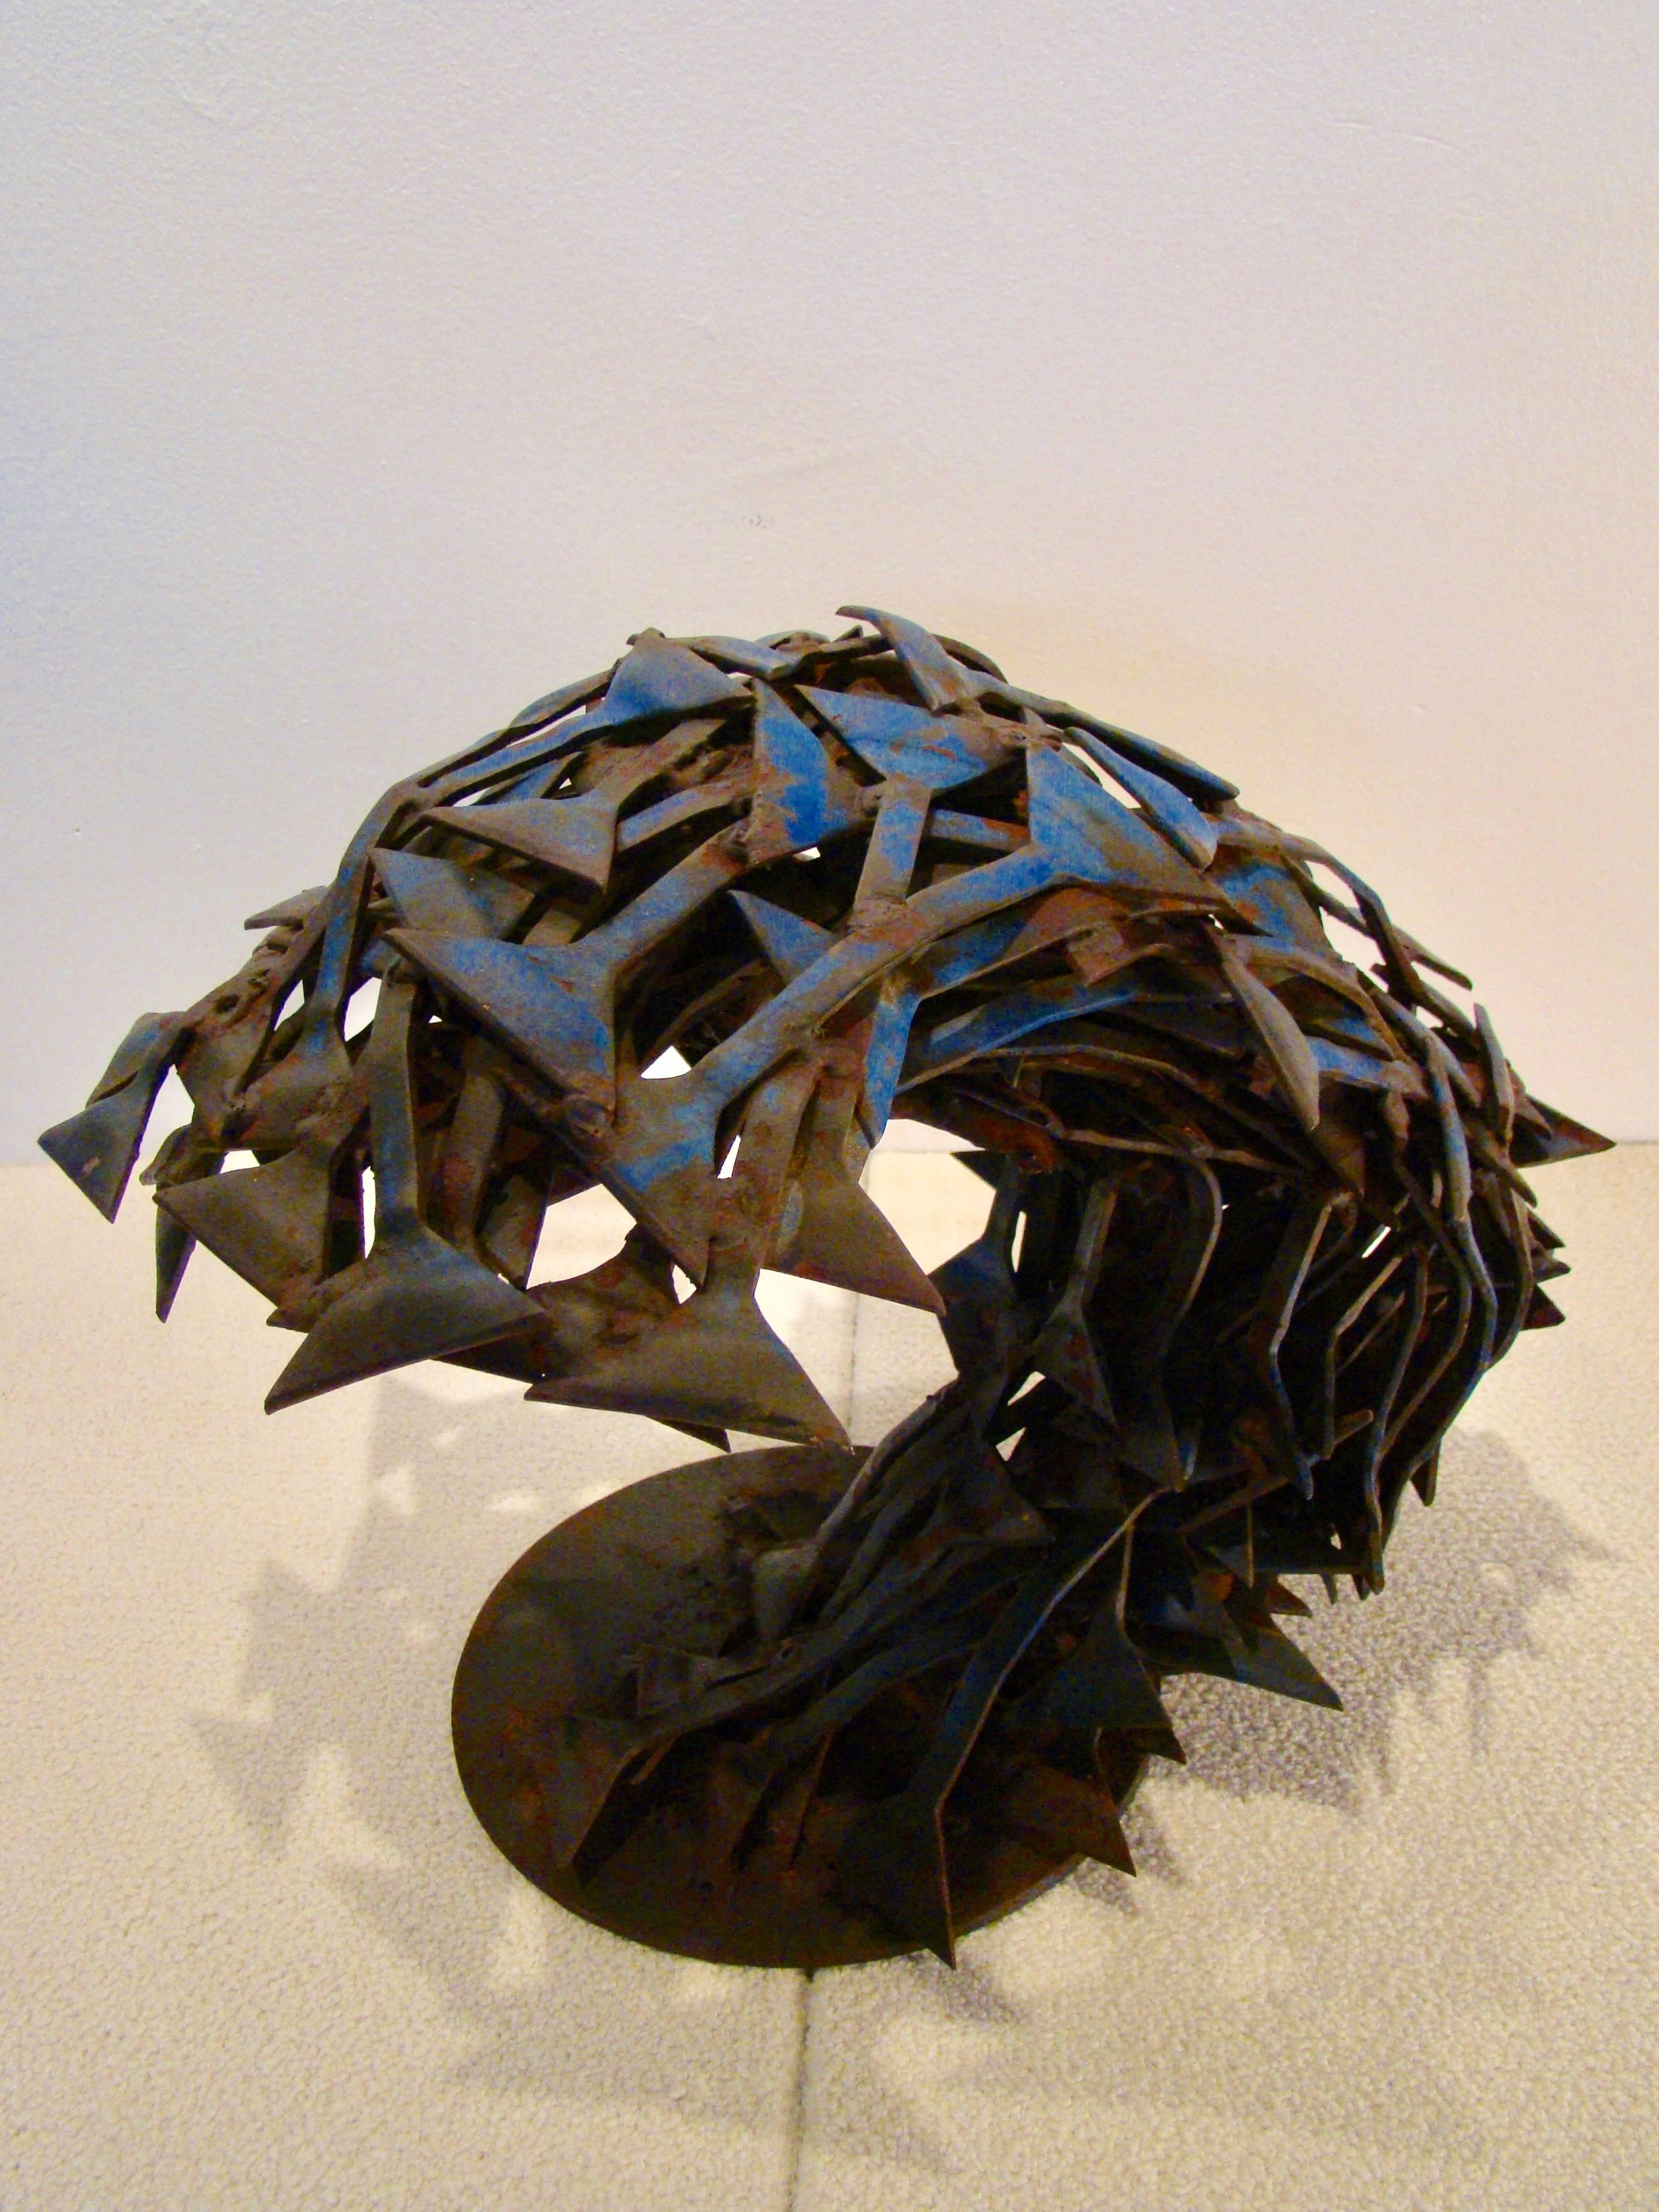 Brutalist abstract sculpture that resembles a roaring sea urchin, circa 1990s.